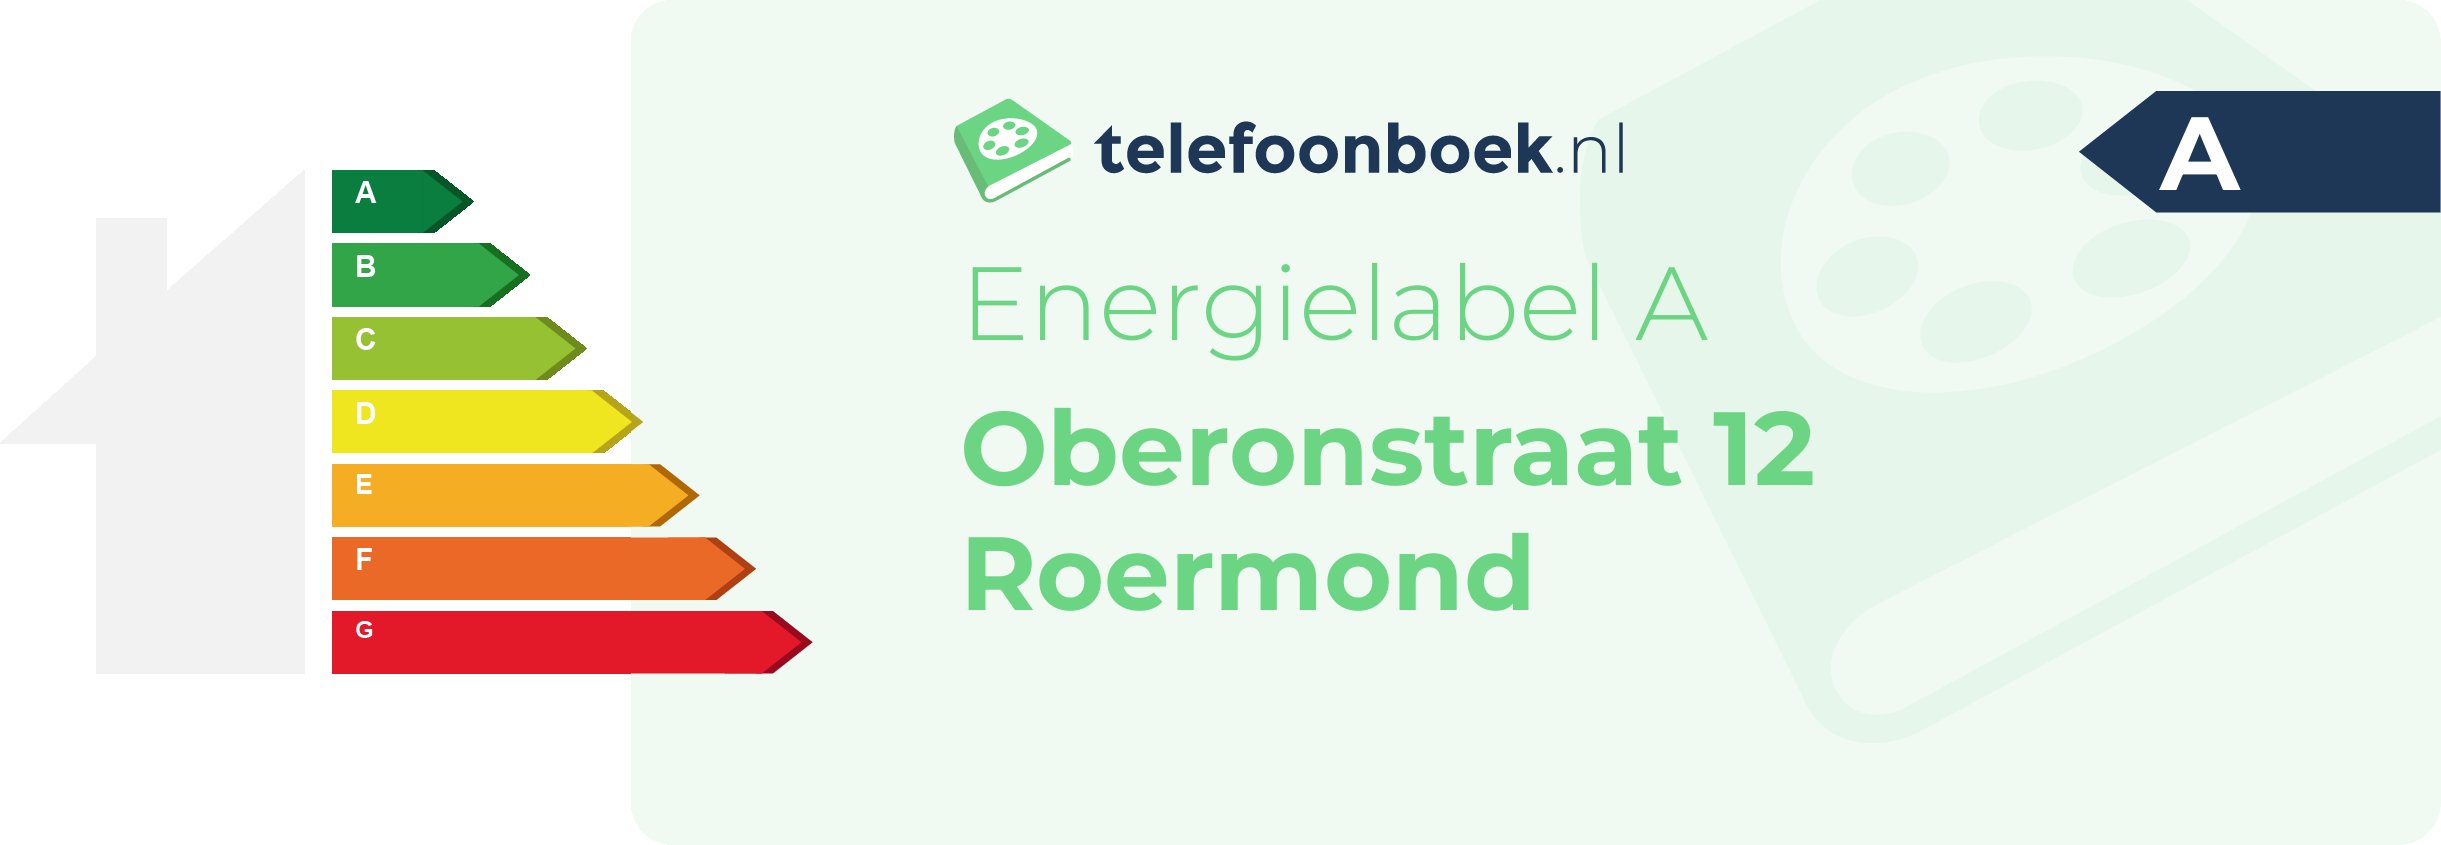 Energielabel Oberonstraat 12 Roermond